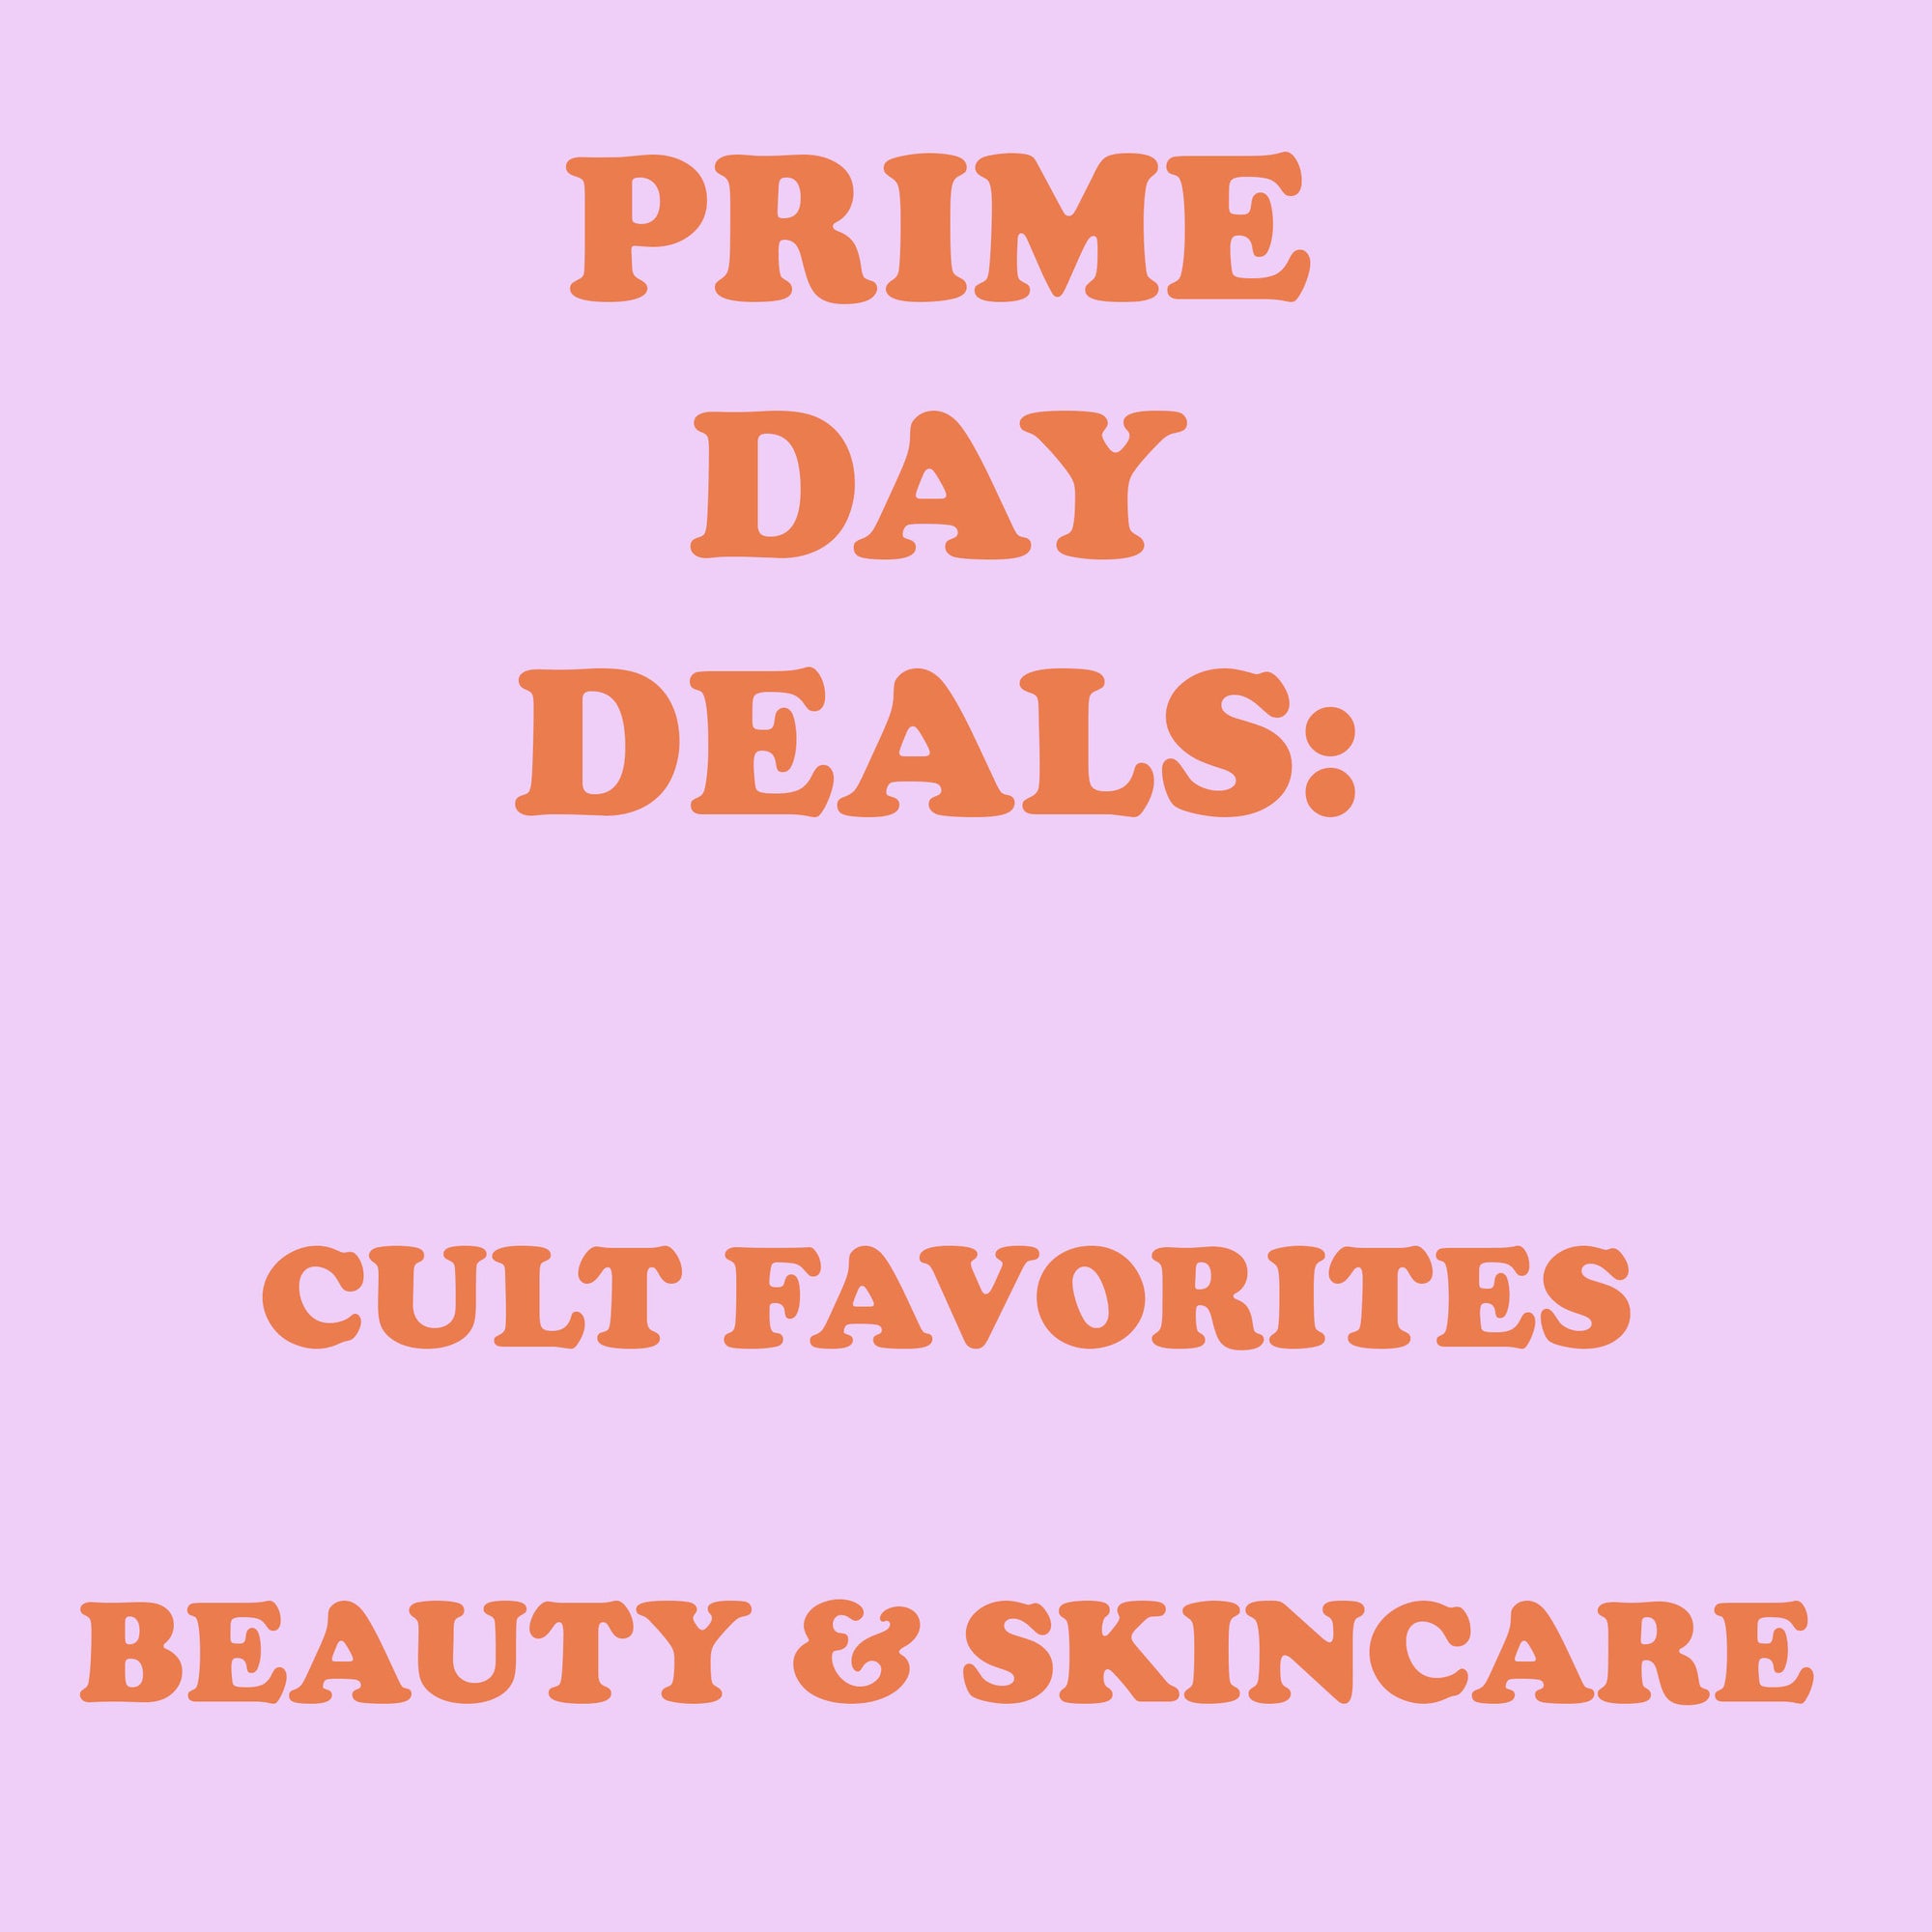 Prime Day Deals: Cult Favorite Beauty & Skincare